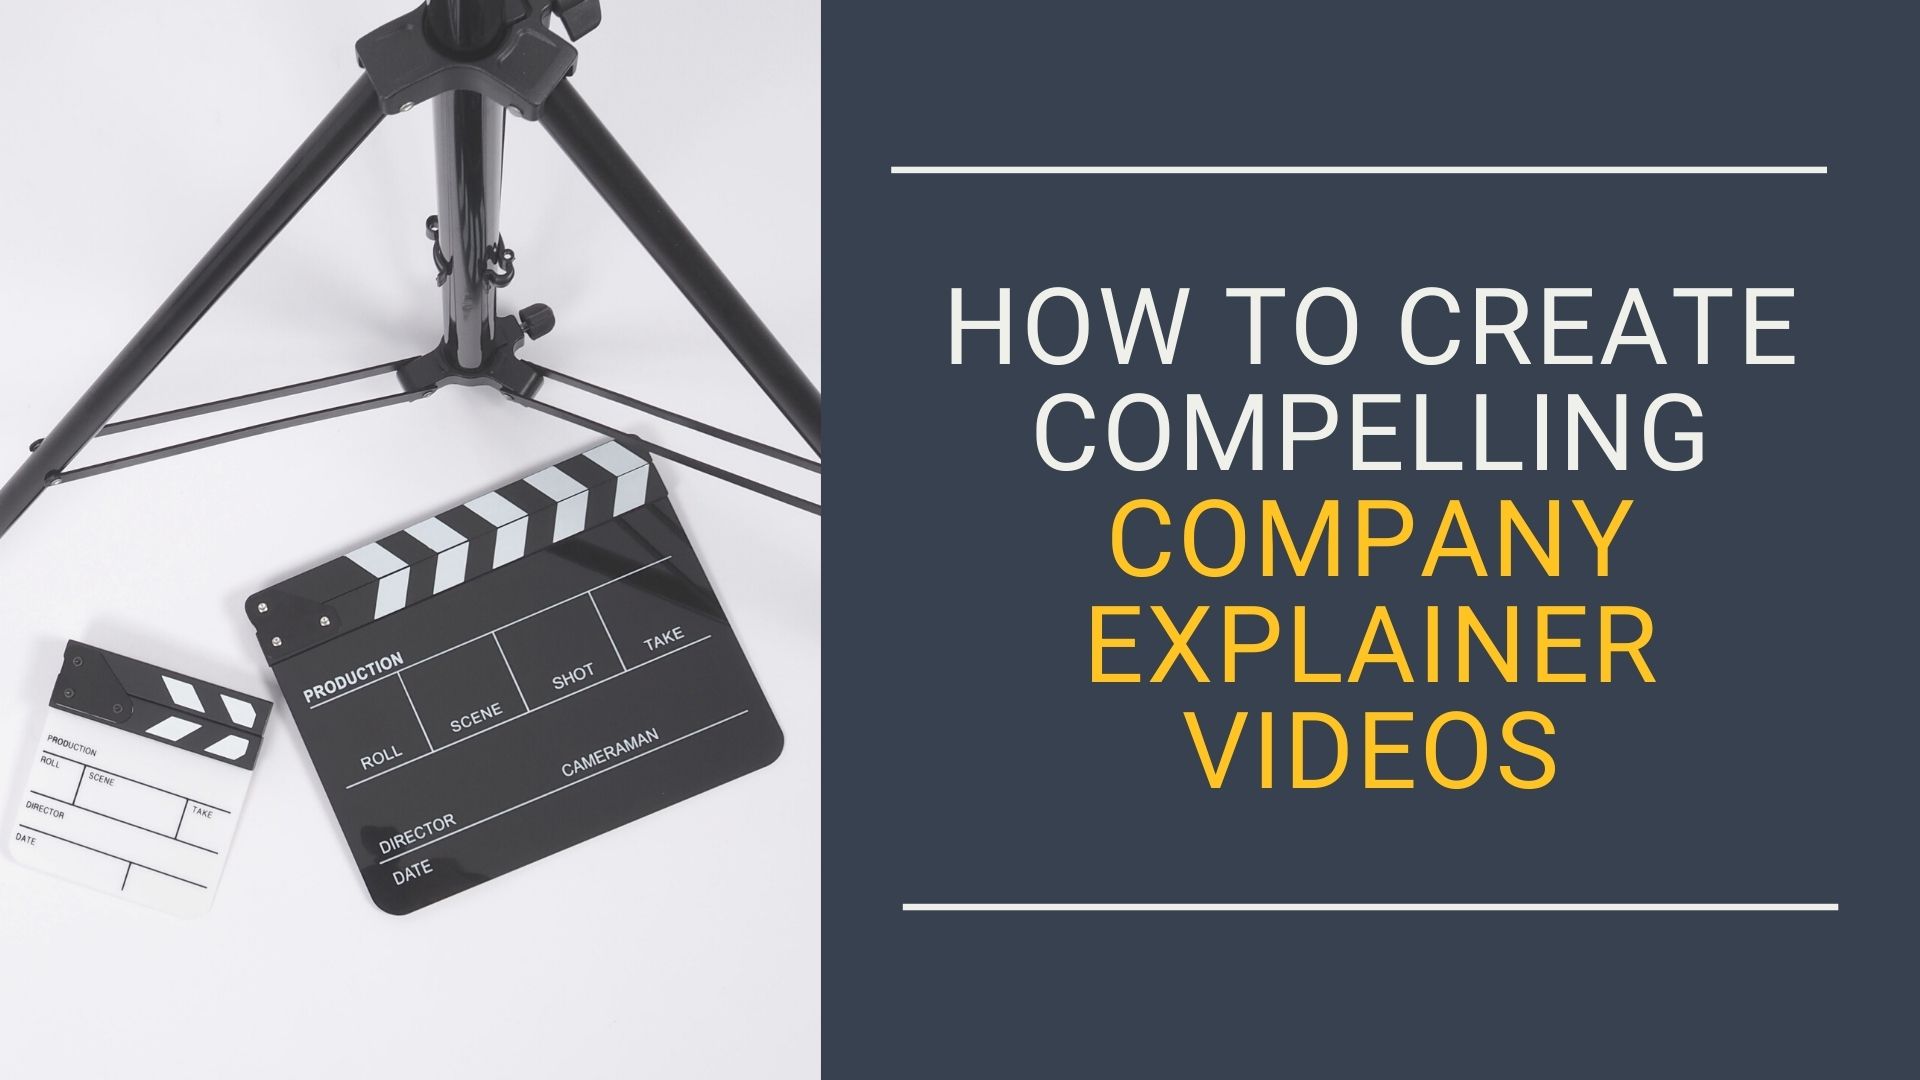 Company Explainer Videos